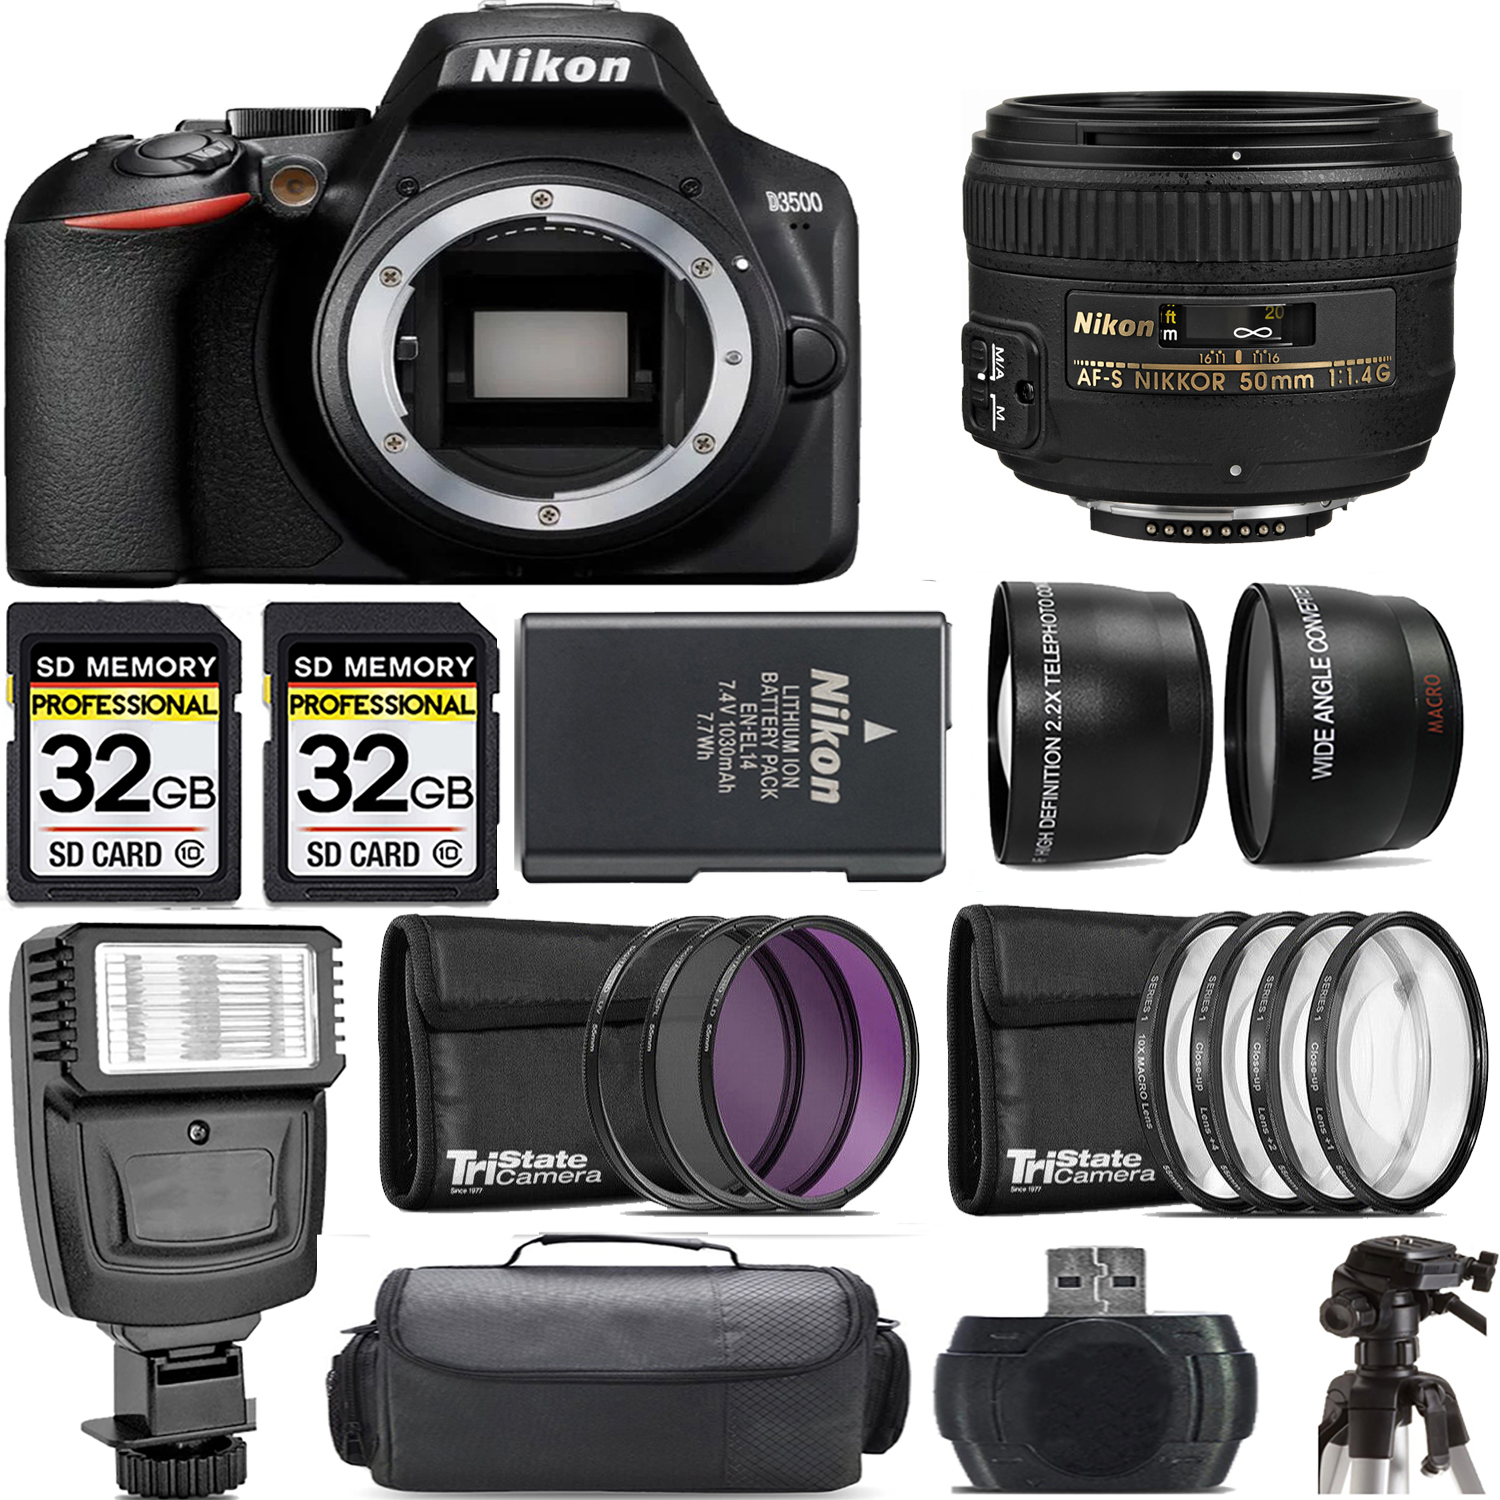 Nikon D3500 FAQs